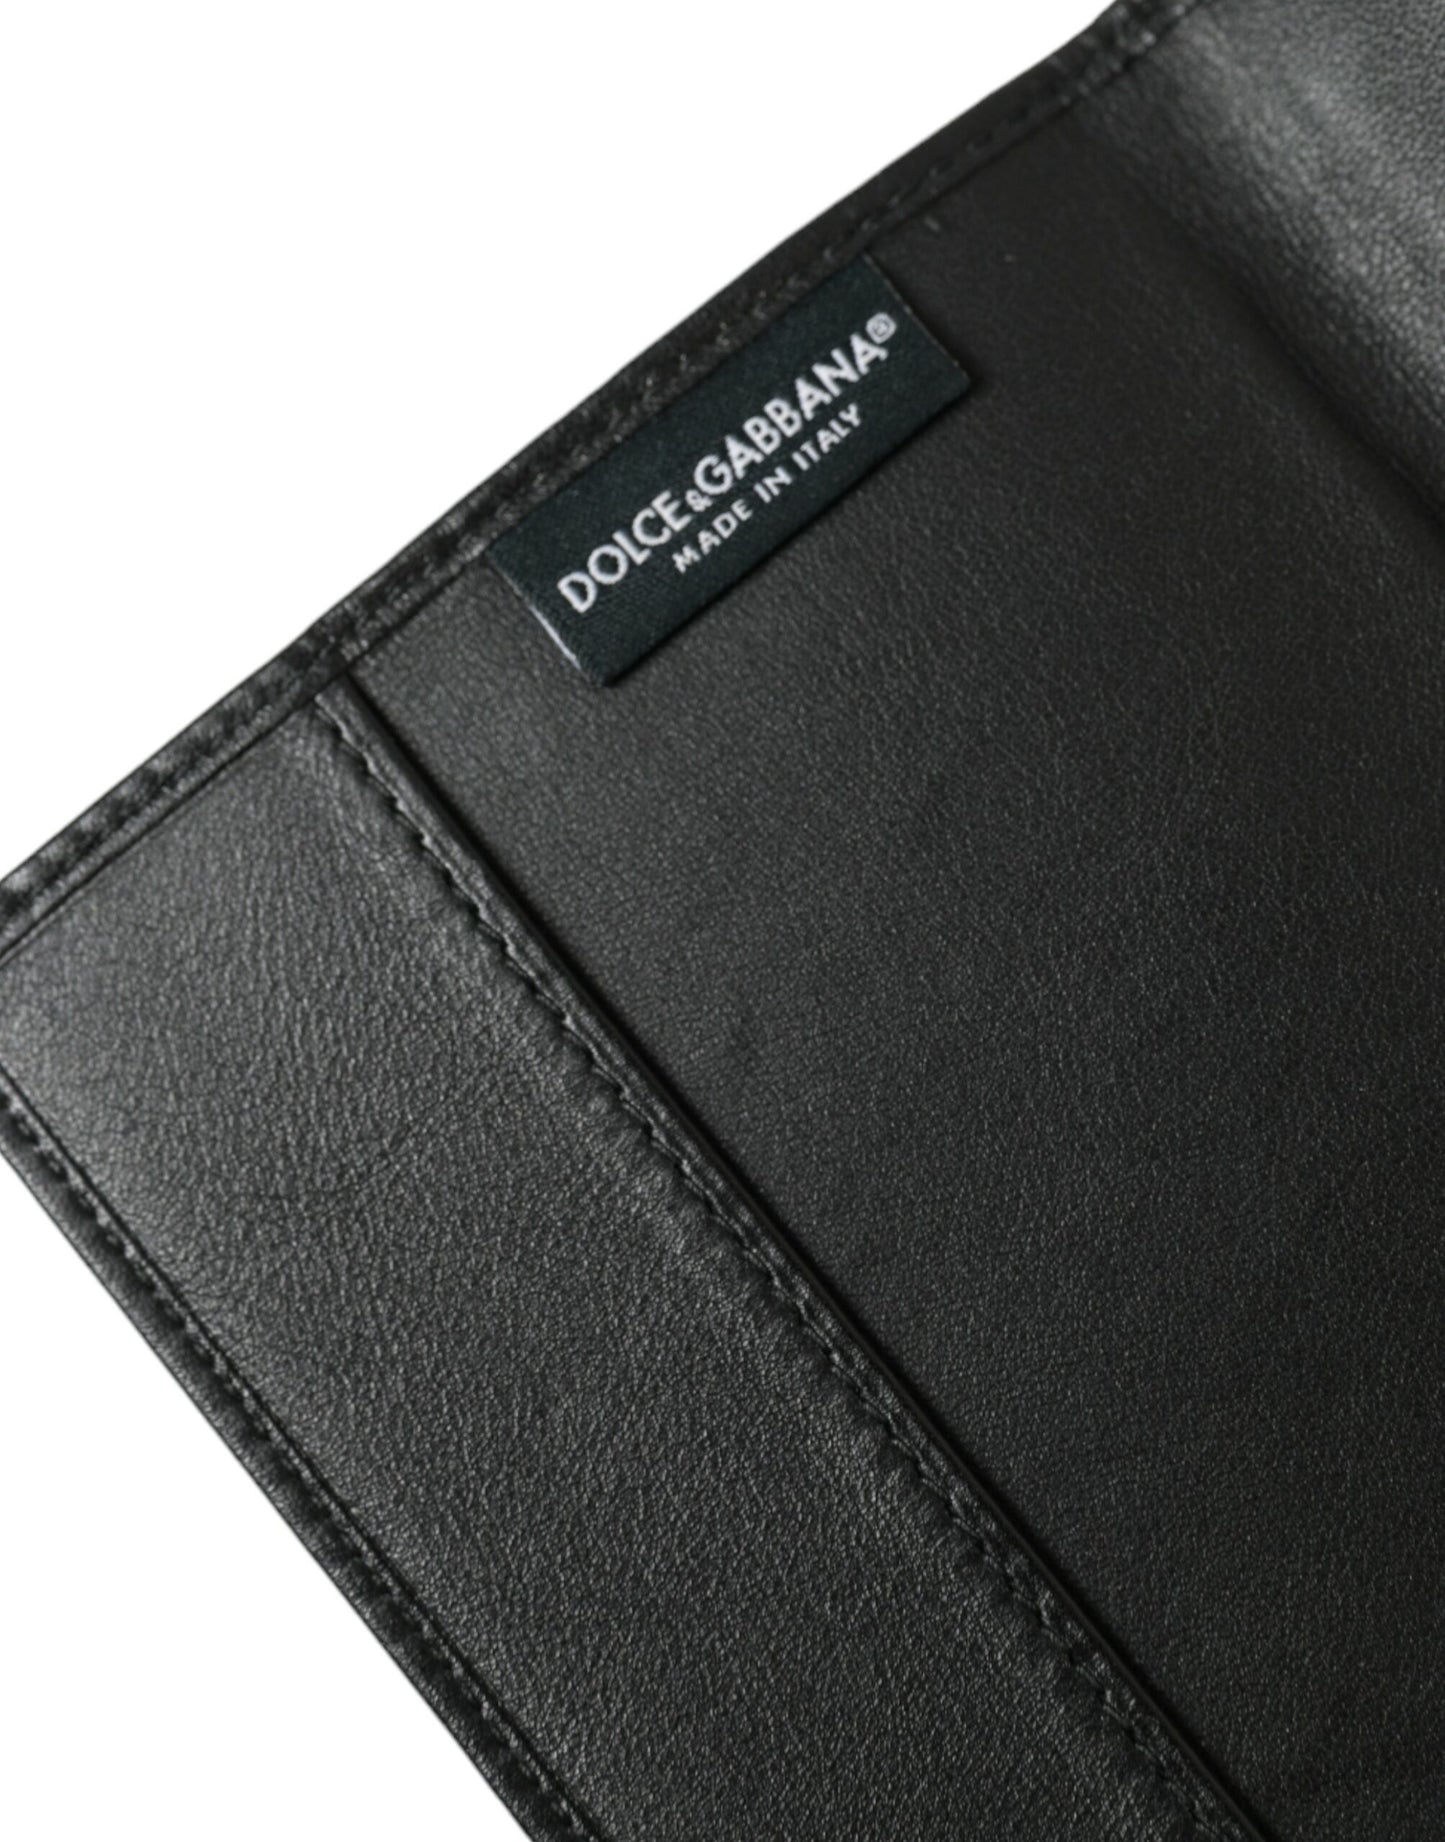 Dolce & Gabbana Black Exotic Skin Leather Long Bifold Passport Holder